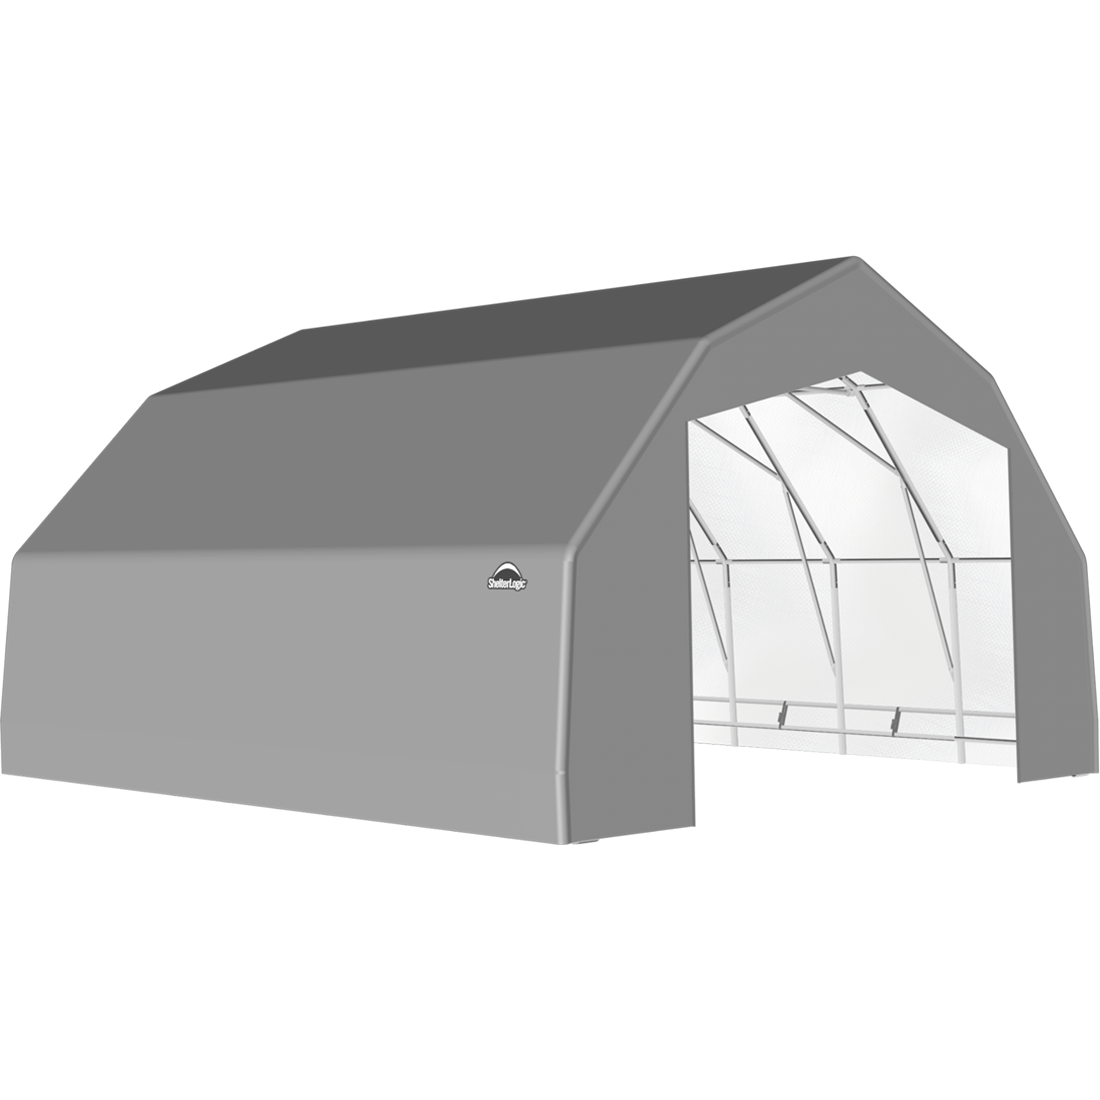 ShelterTech SP Series Barn Shelter, 25 ft. x 20 ft. x 14 ft. Heavy Duty PVC 14.5 oz. Gray